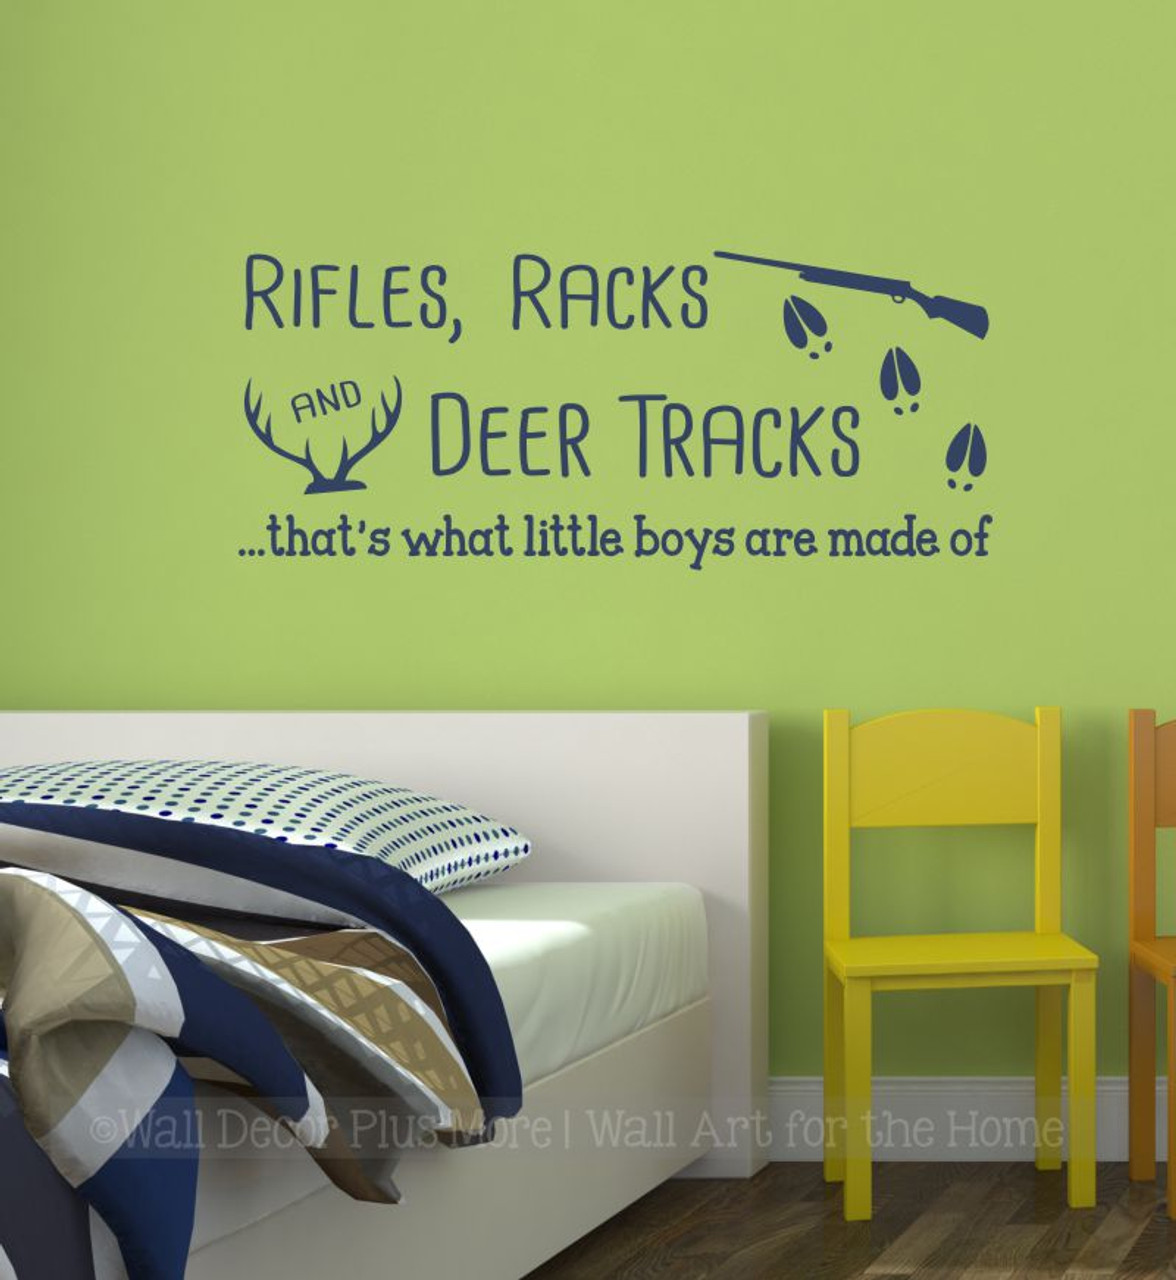 Rifle Racks Deer Track Little Boys Made Of Wall Decal Sticker Kids Room